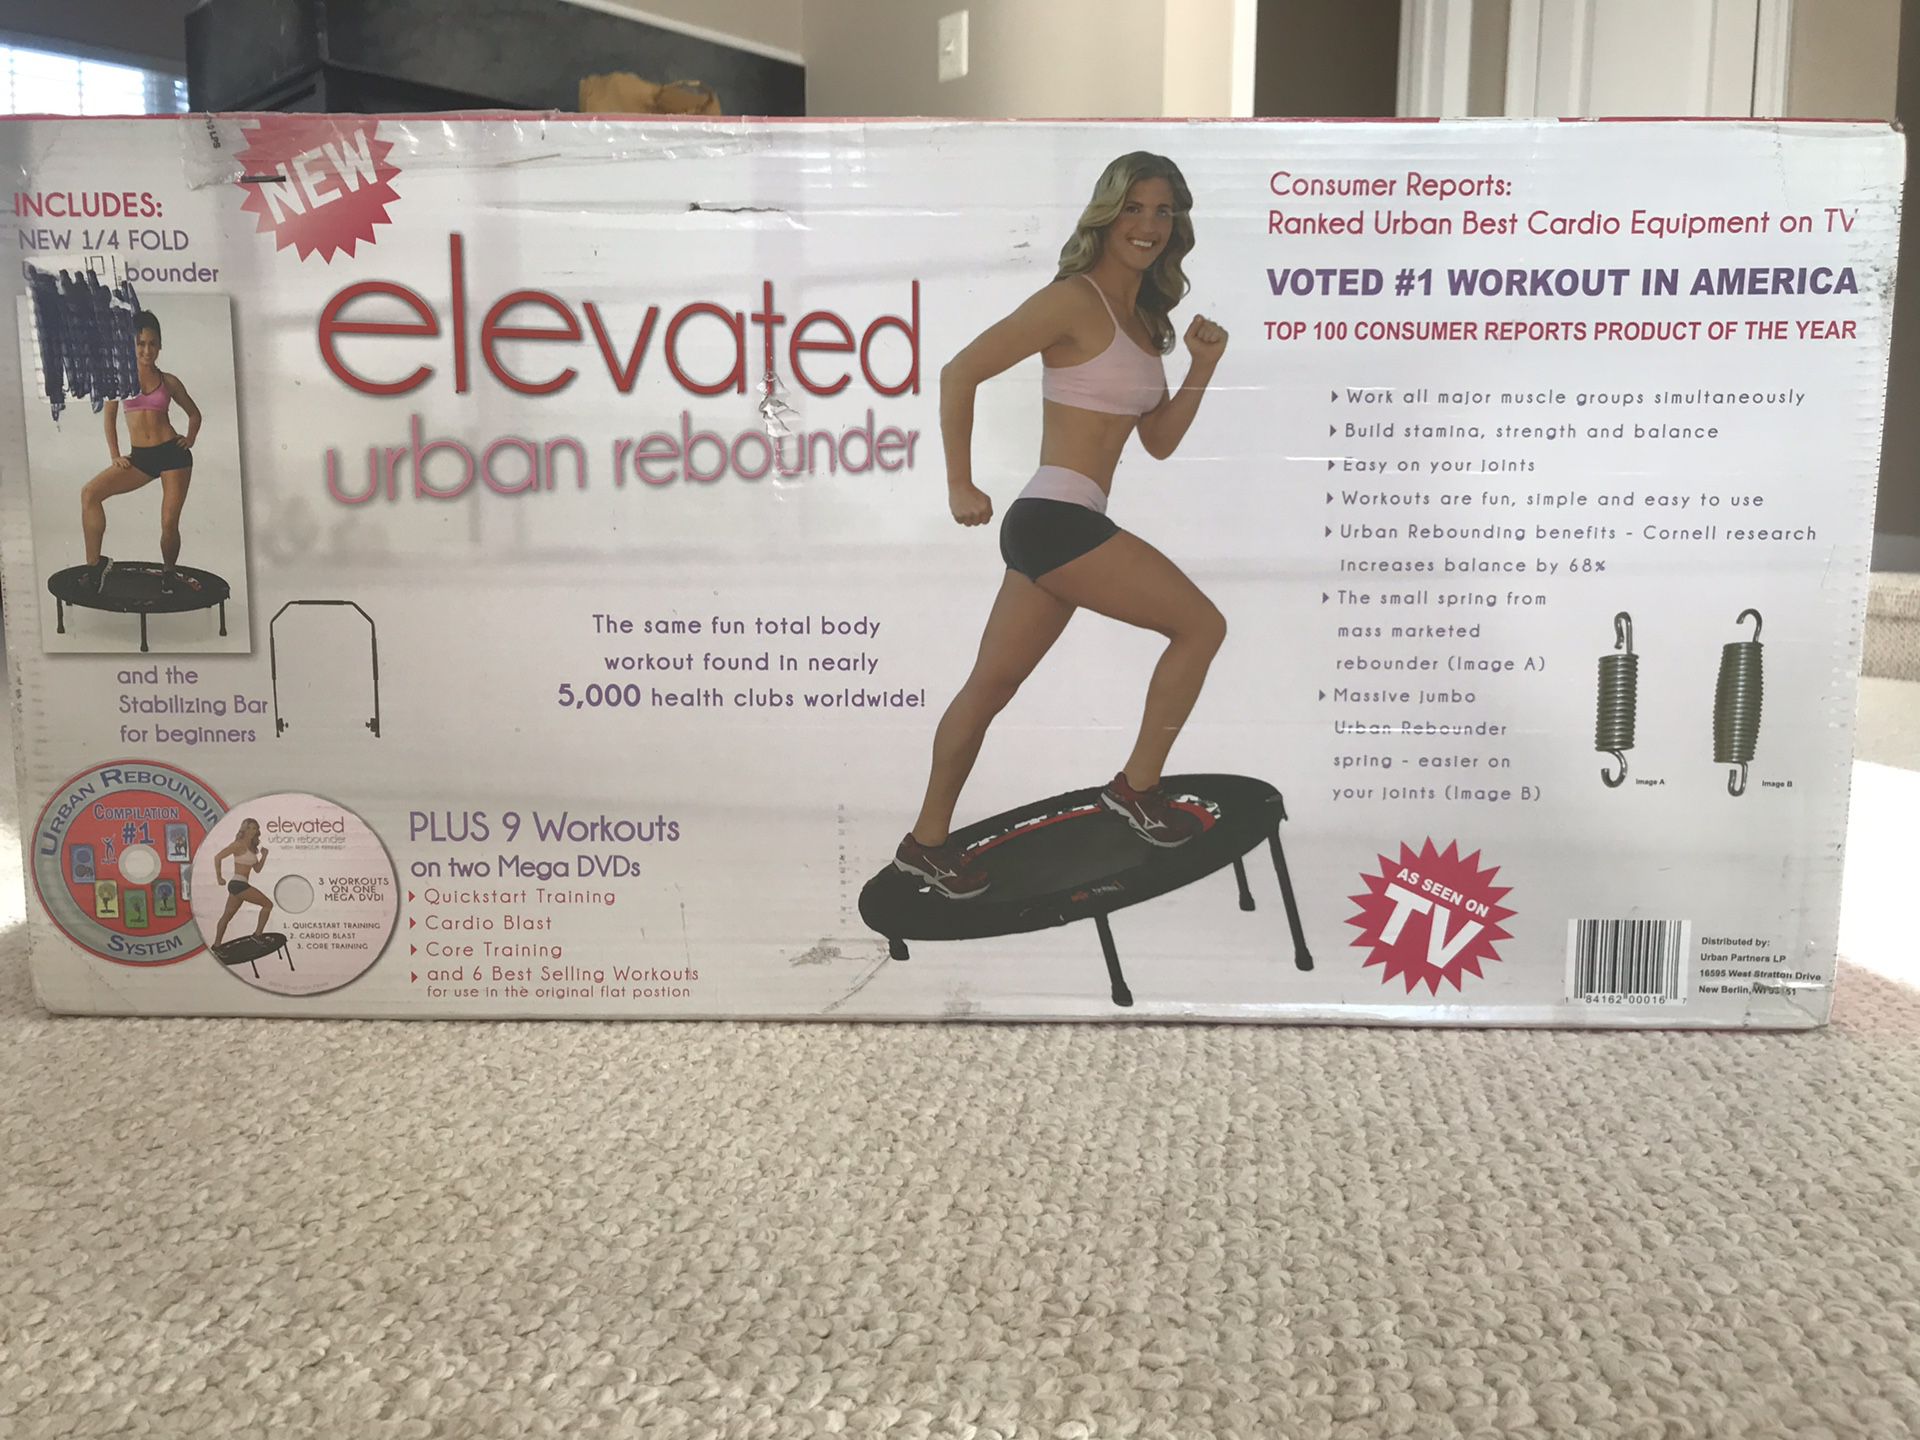 Elevated Urban Rebounder exercise equipment